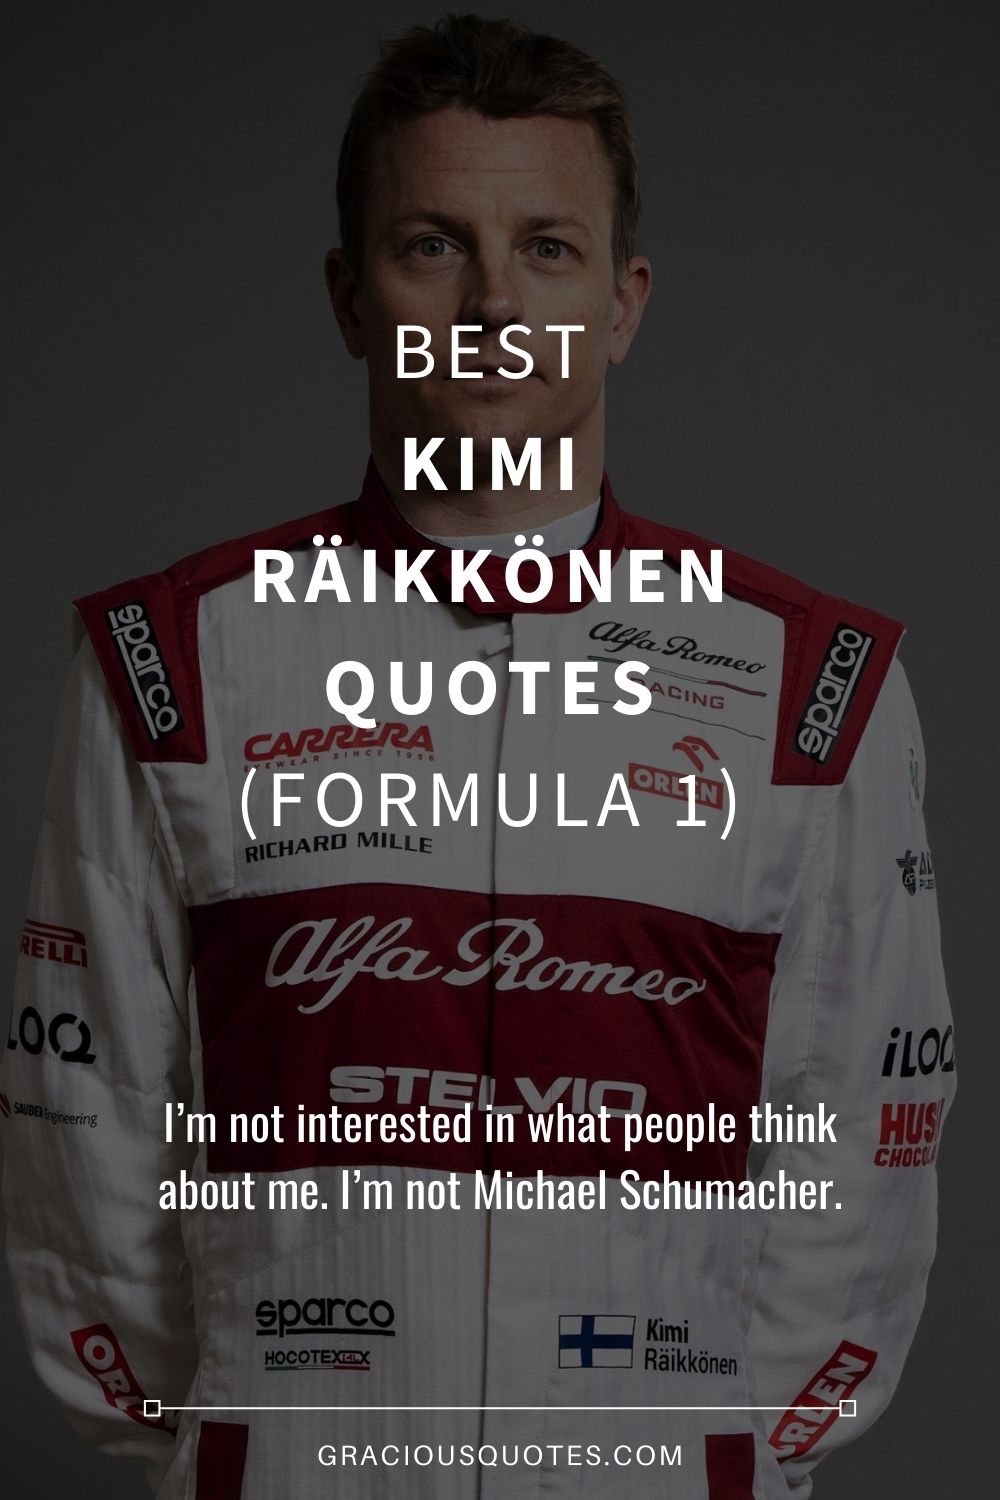 Best Kimi Räikkönen Quotes (FORMULA 1) - Gracious Quotes